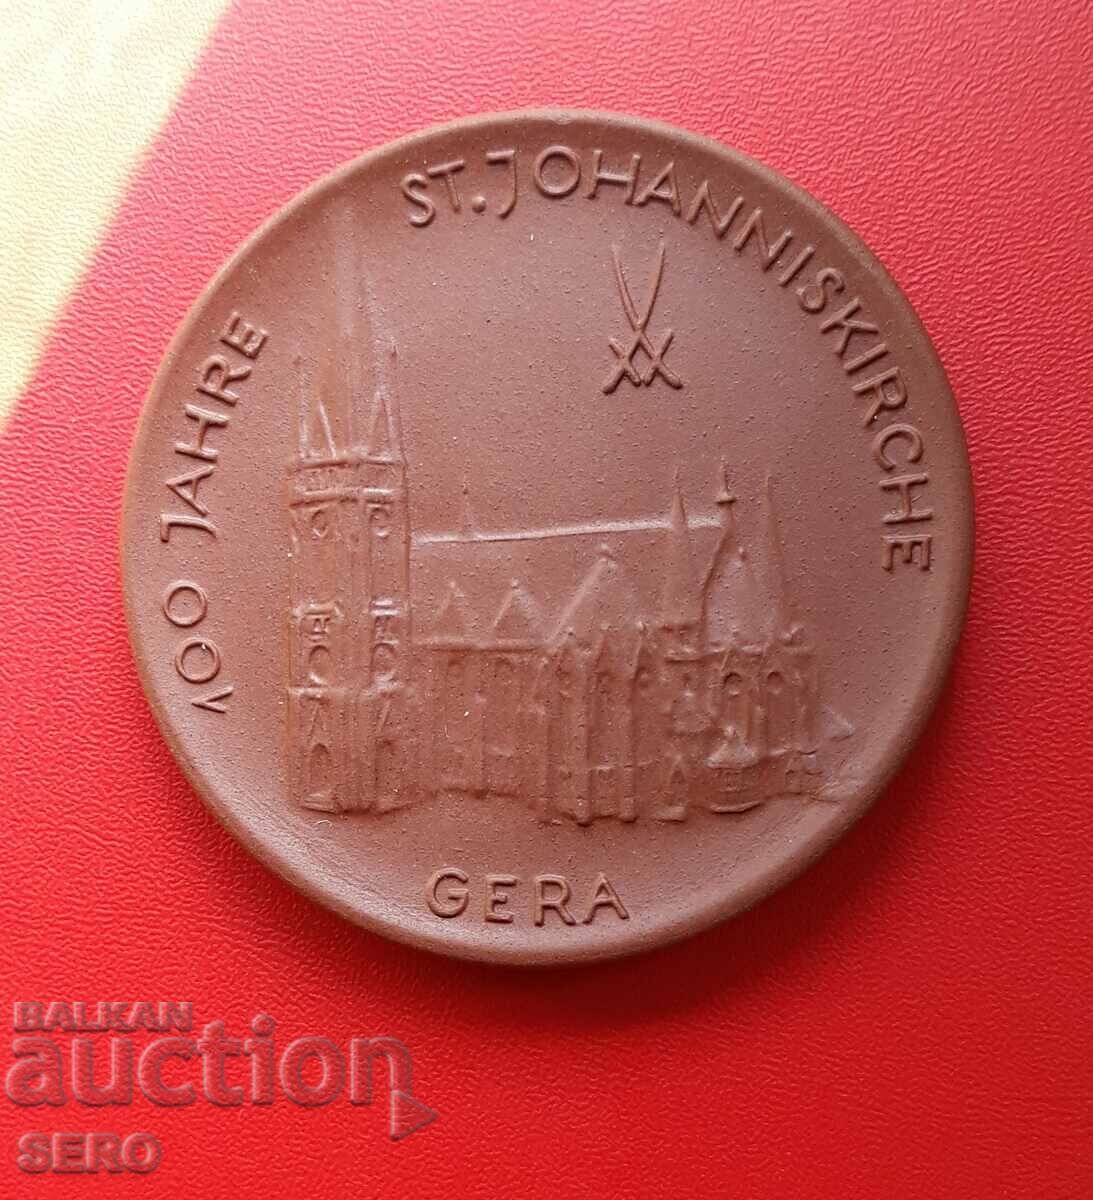 Germany-GDR-porcelain medal-100 years Church of St. Johann in Gera